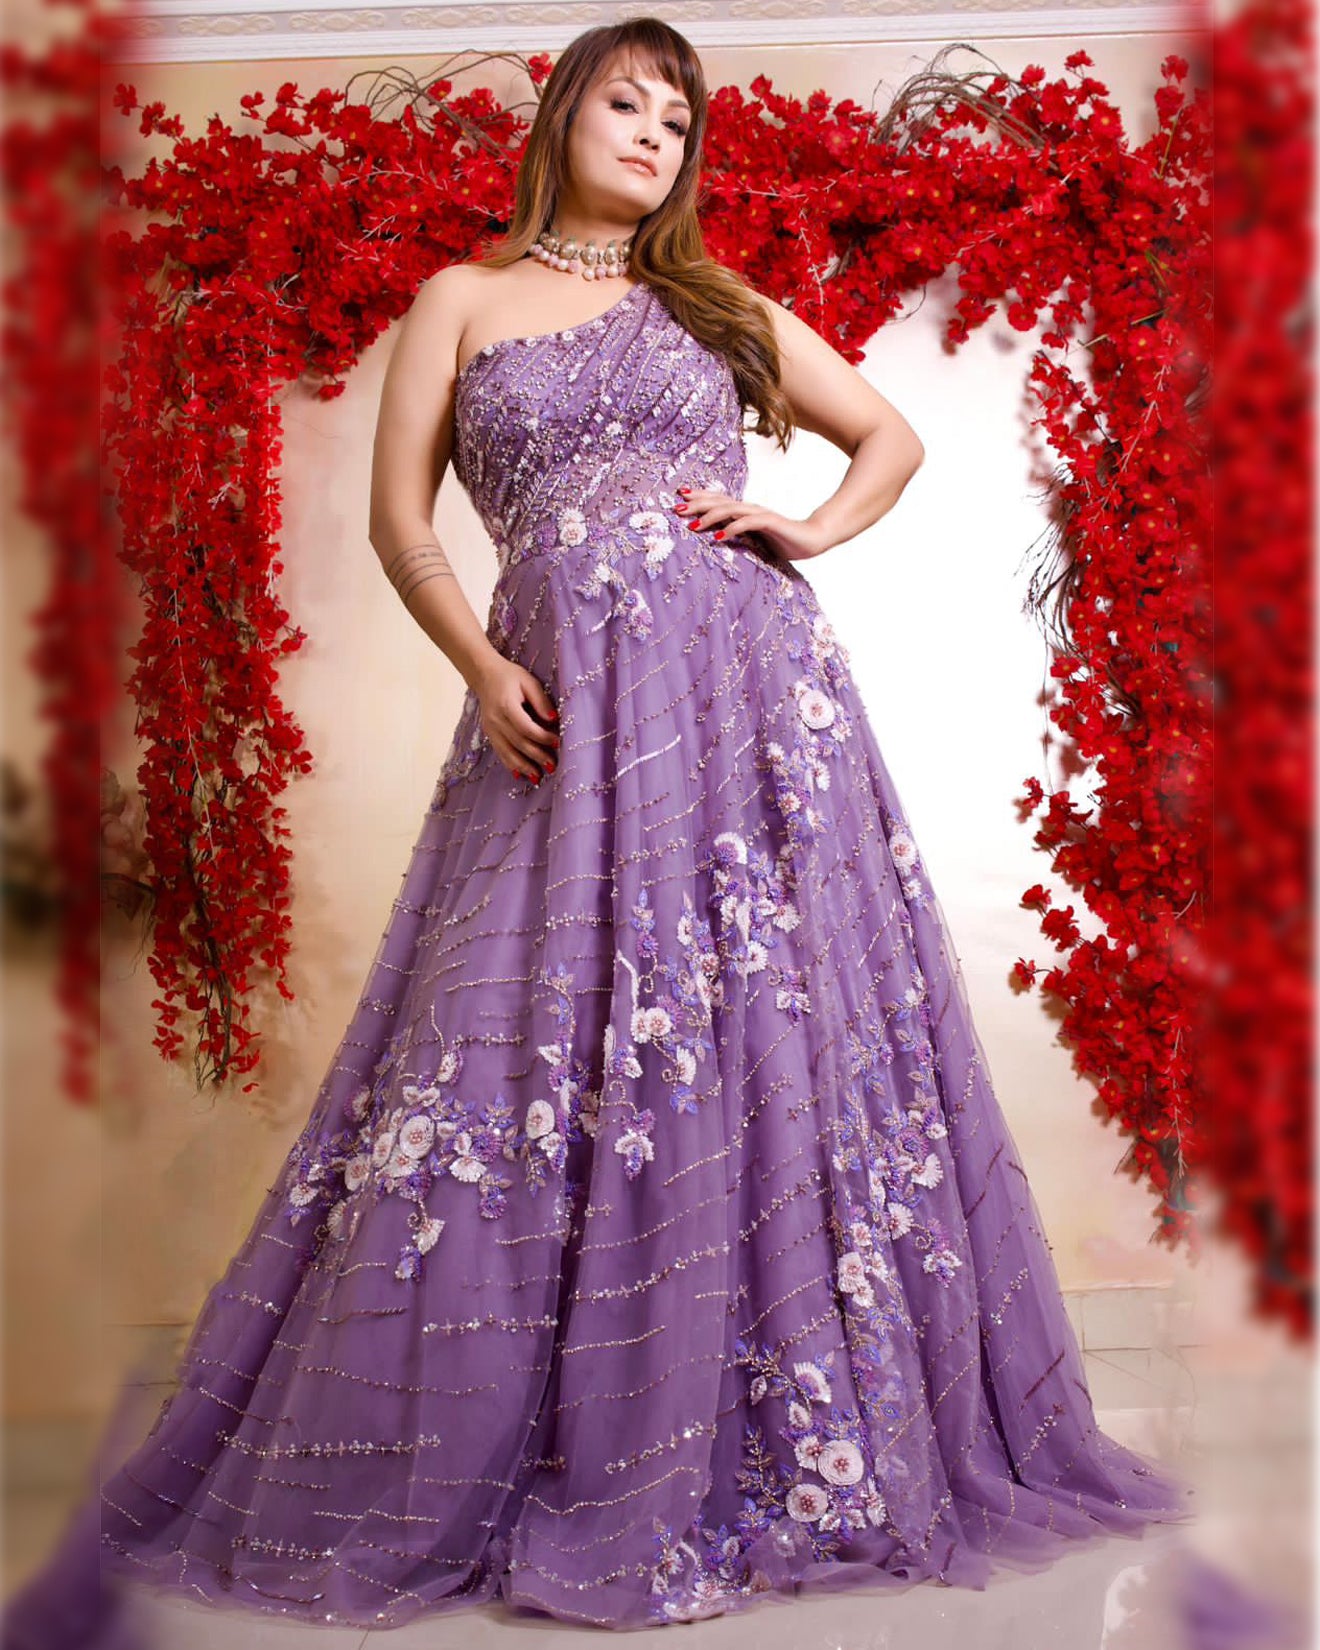 Nisha Rawal In Lavender Purple Embellished Cocktail Gown